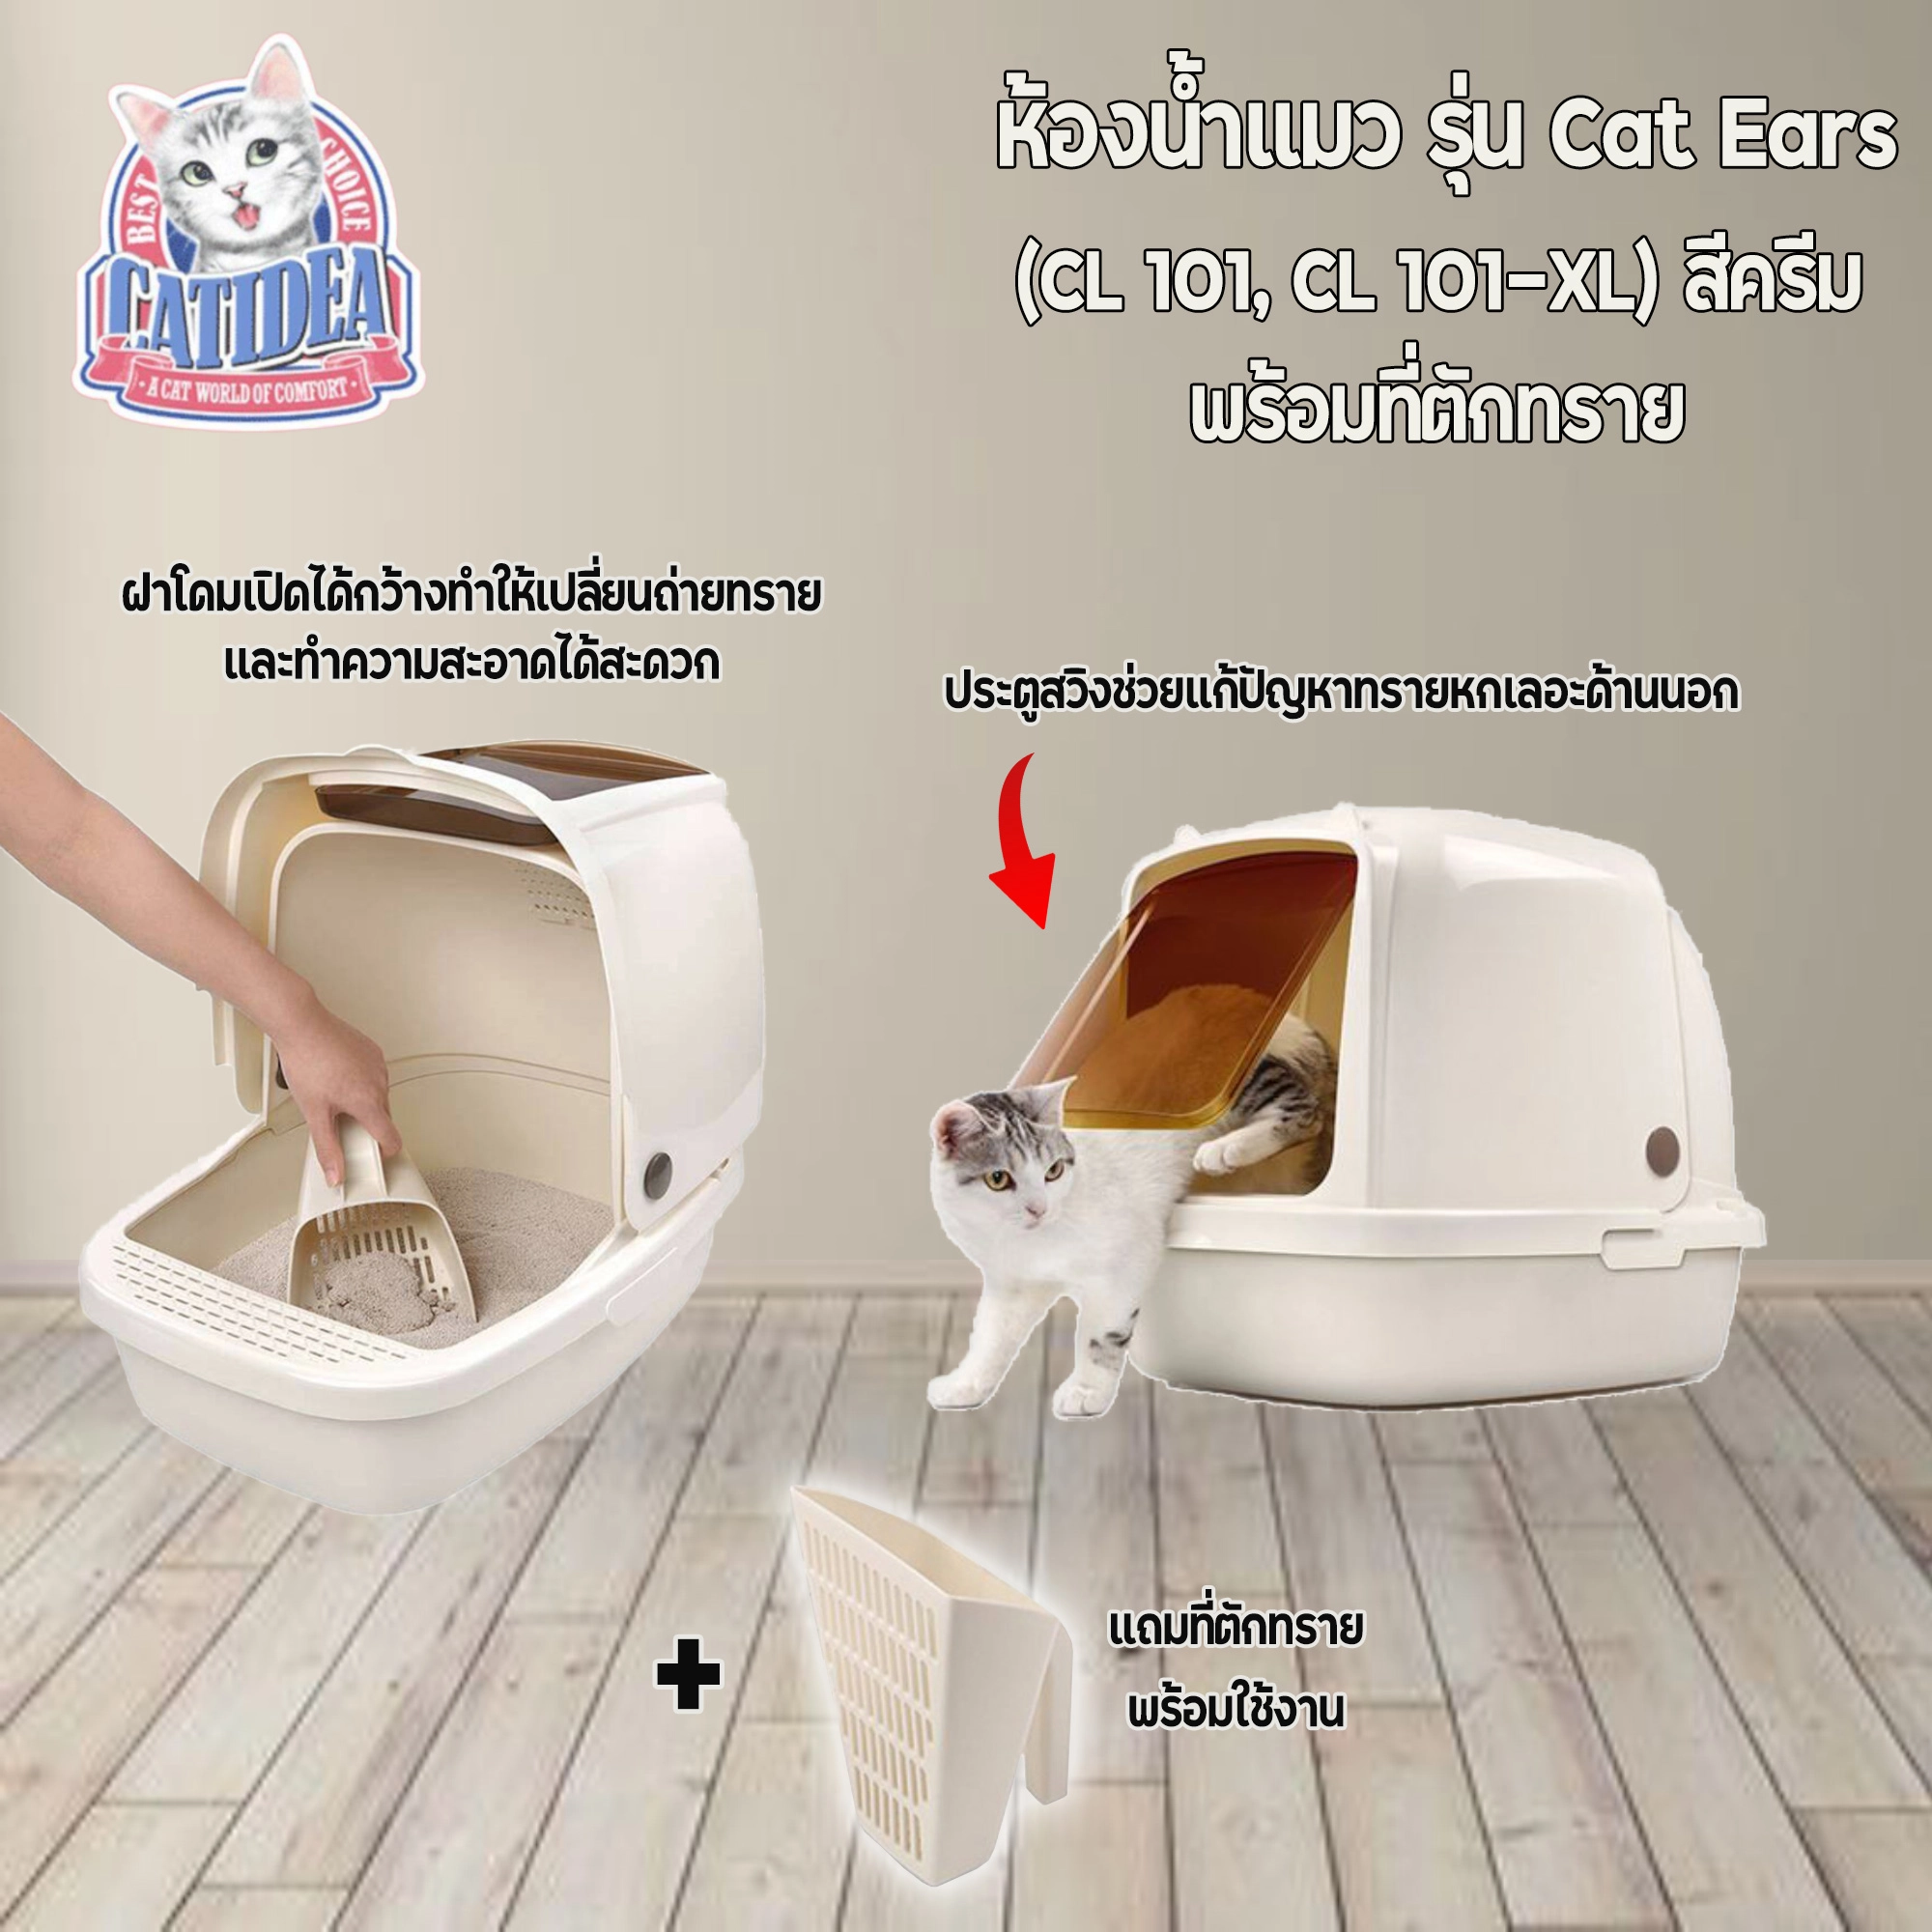 Catidea รุ่น Cat Ears ห้องน้ำโดมแมวพร้อมที่ตักทราย สีครีม